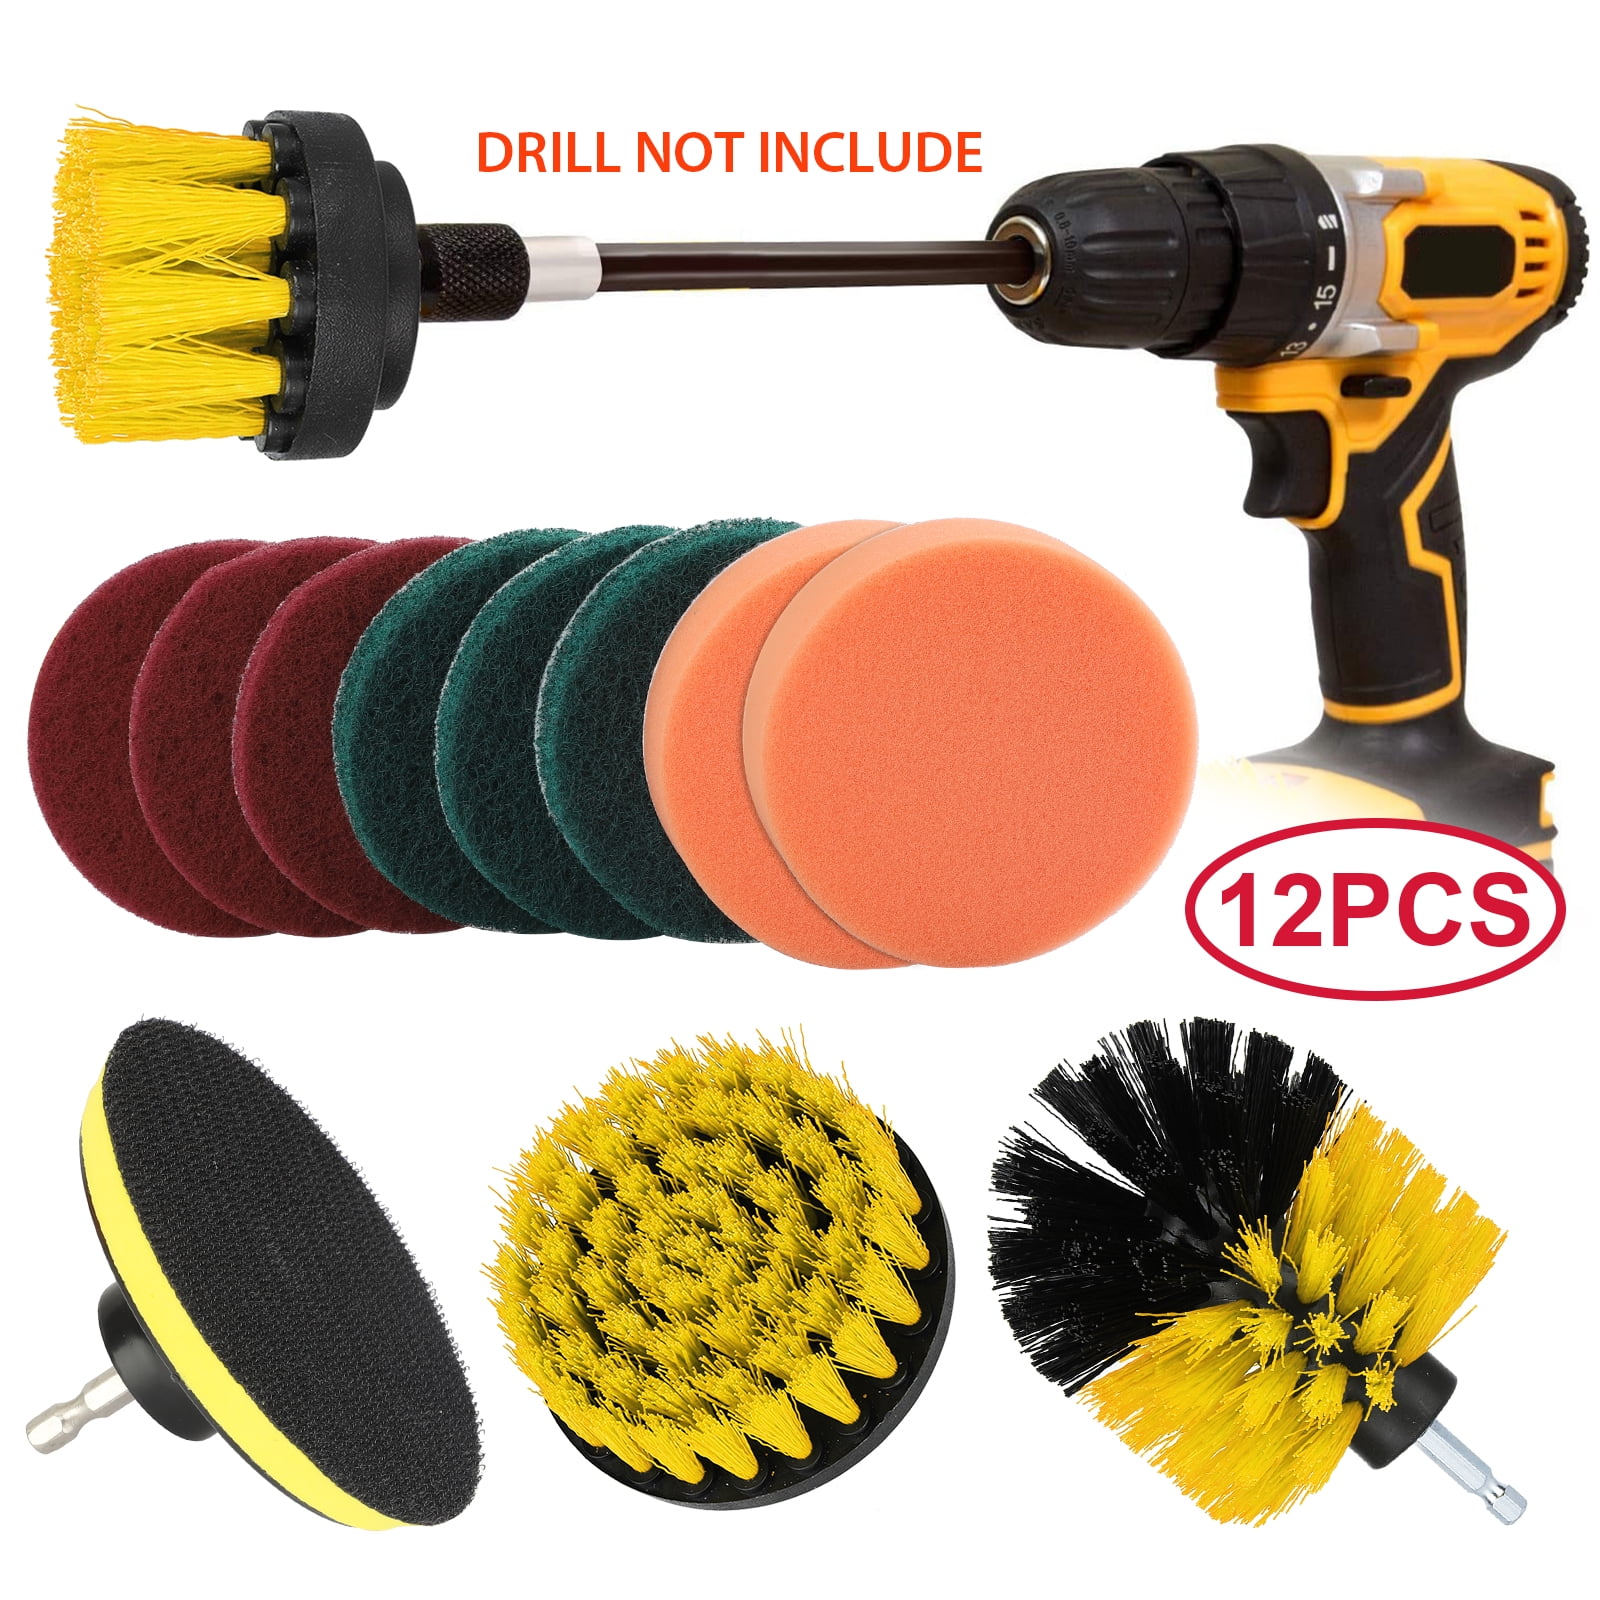 12PCS Drill Brush Set Kit Carpet Grout Tile Power Scrubber Cleaner Attachment 